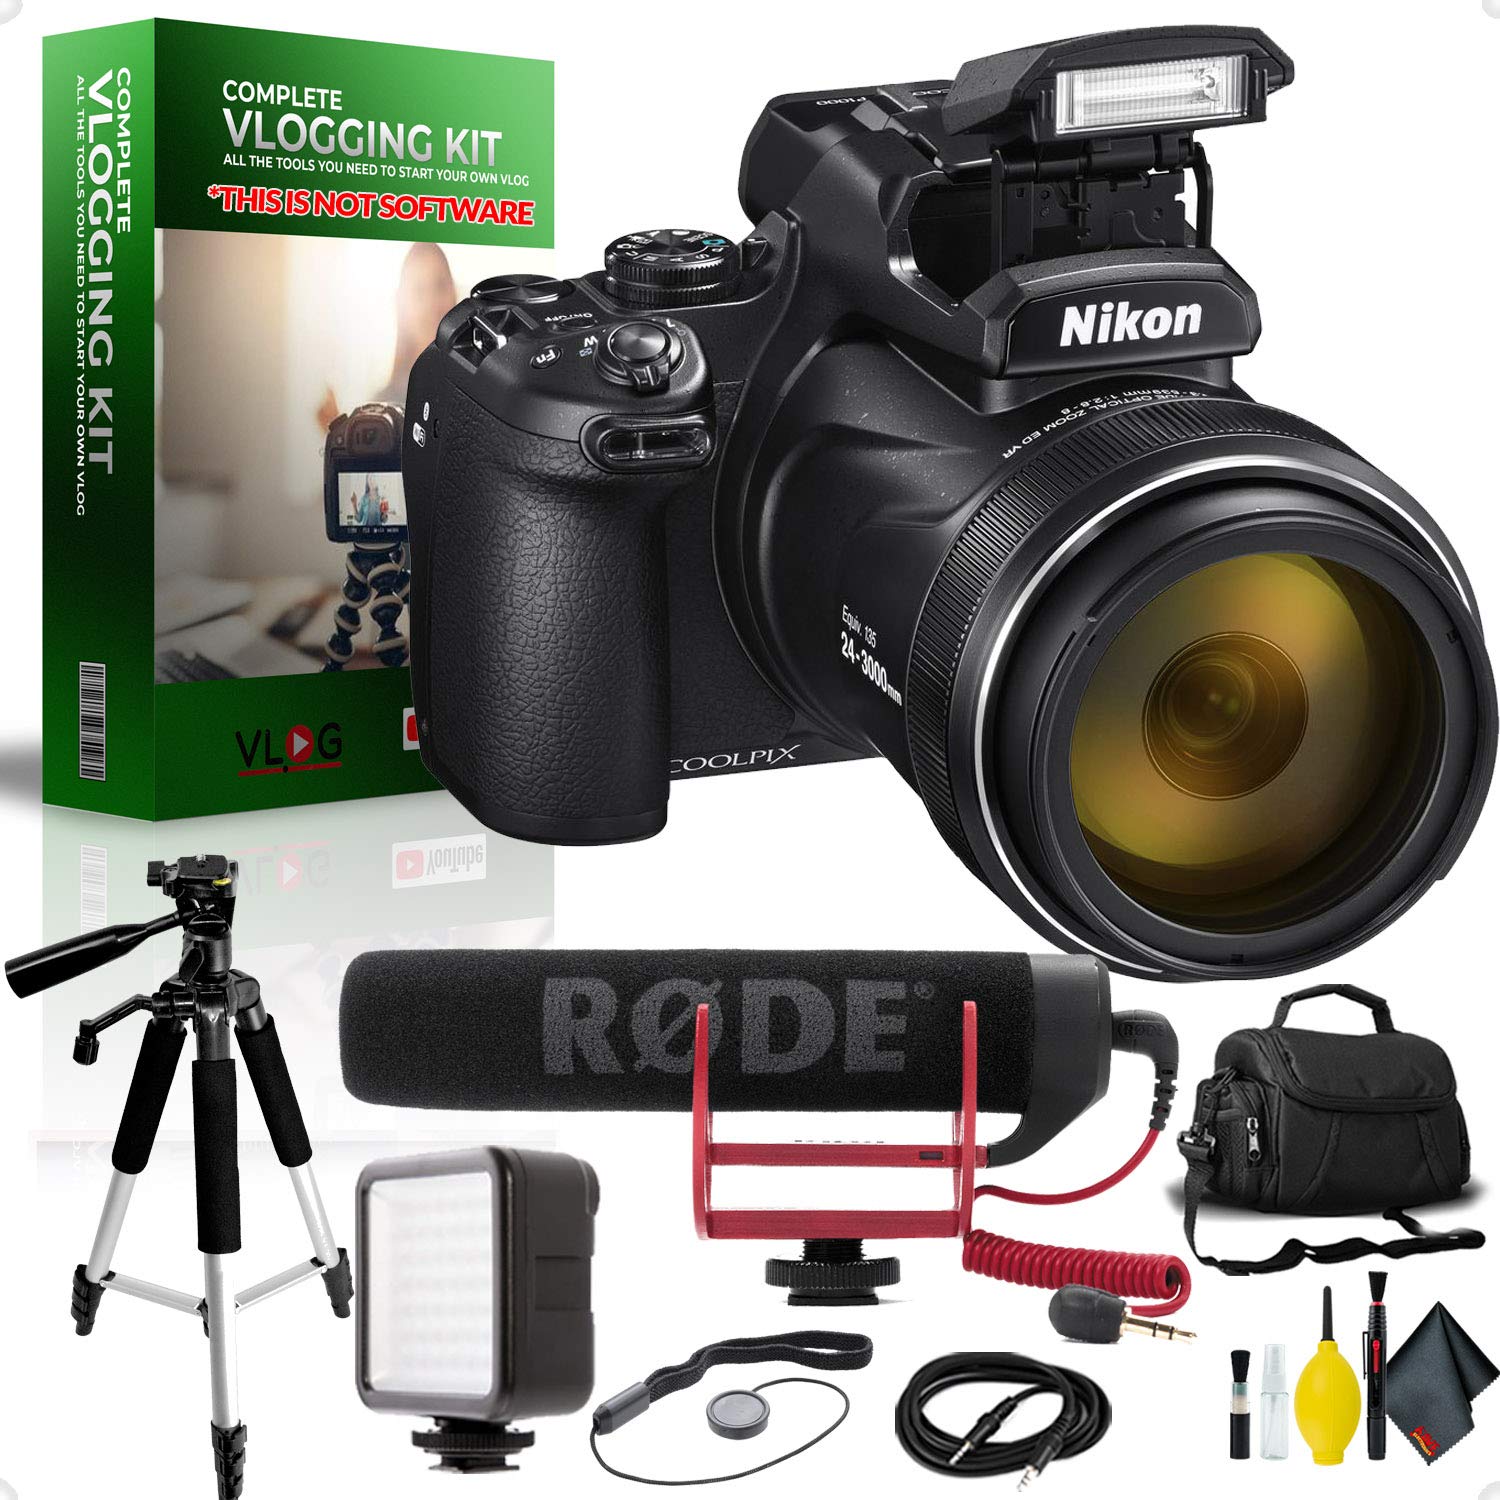 Nikon COOLPIX P1000 Digital Camera - International Model - Complete Vlogging Equipment Kit